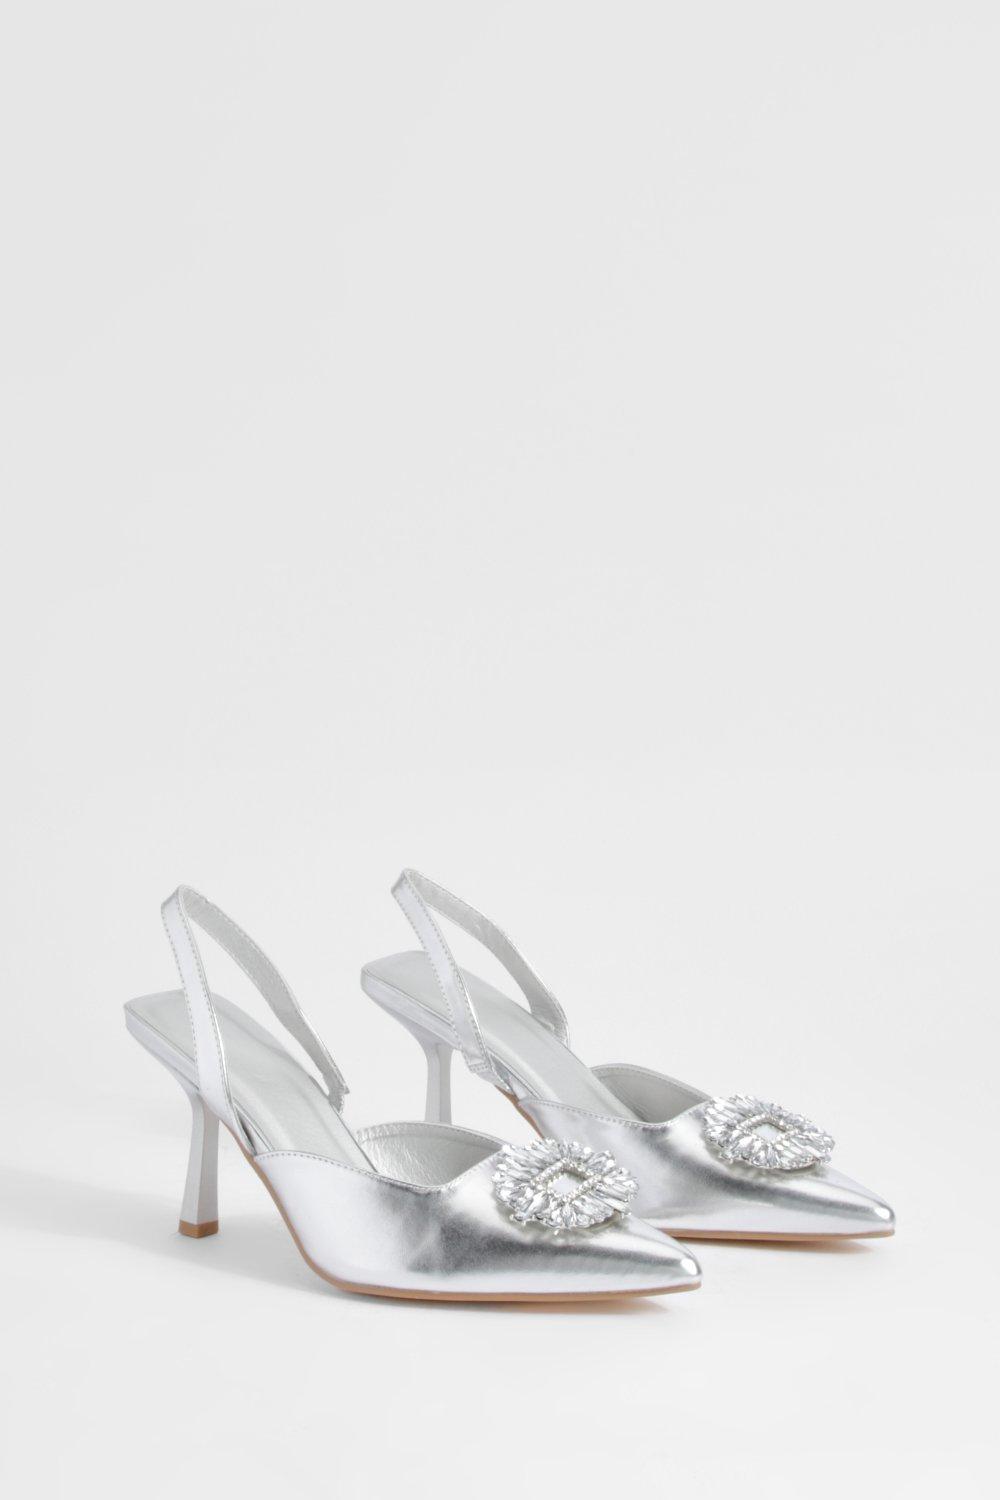 Image of Embellished Court Shoes, Grigio